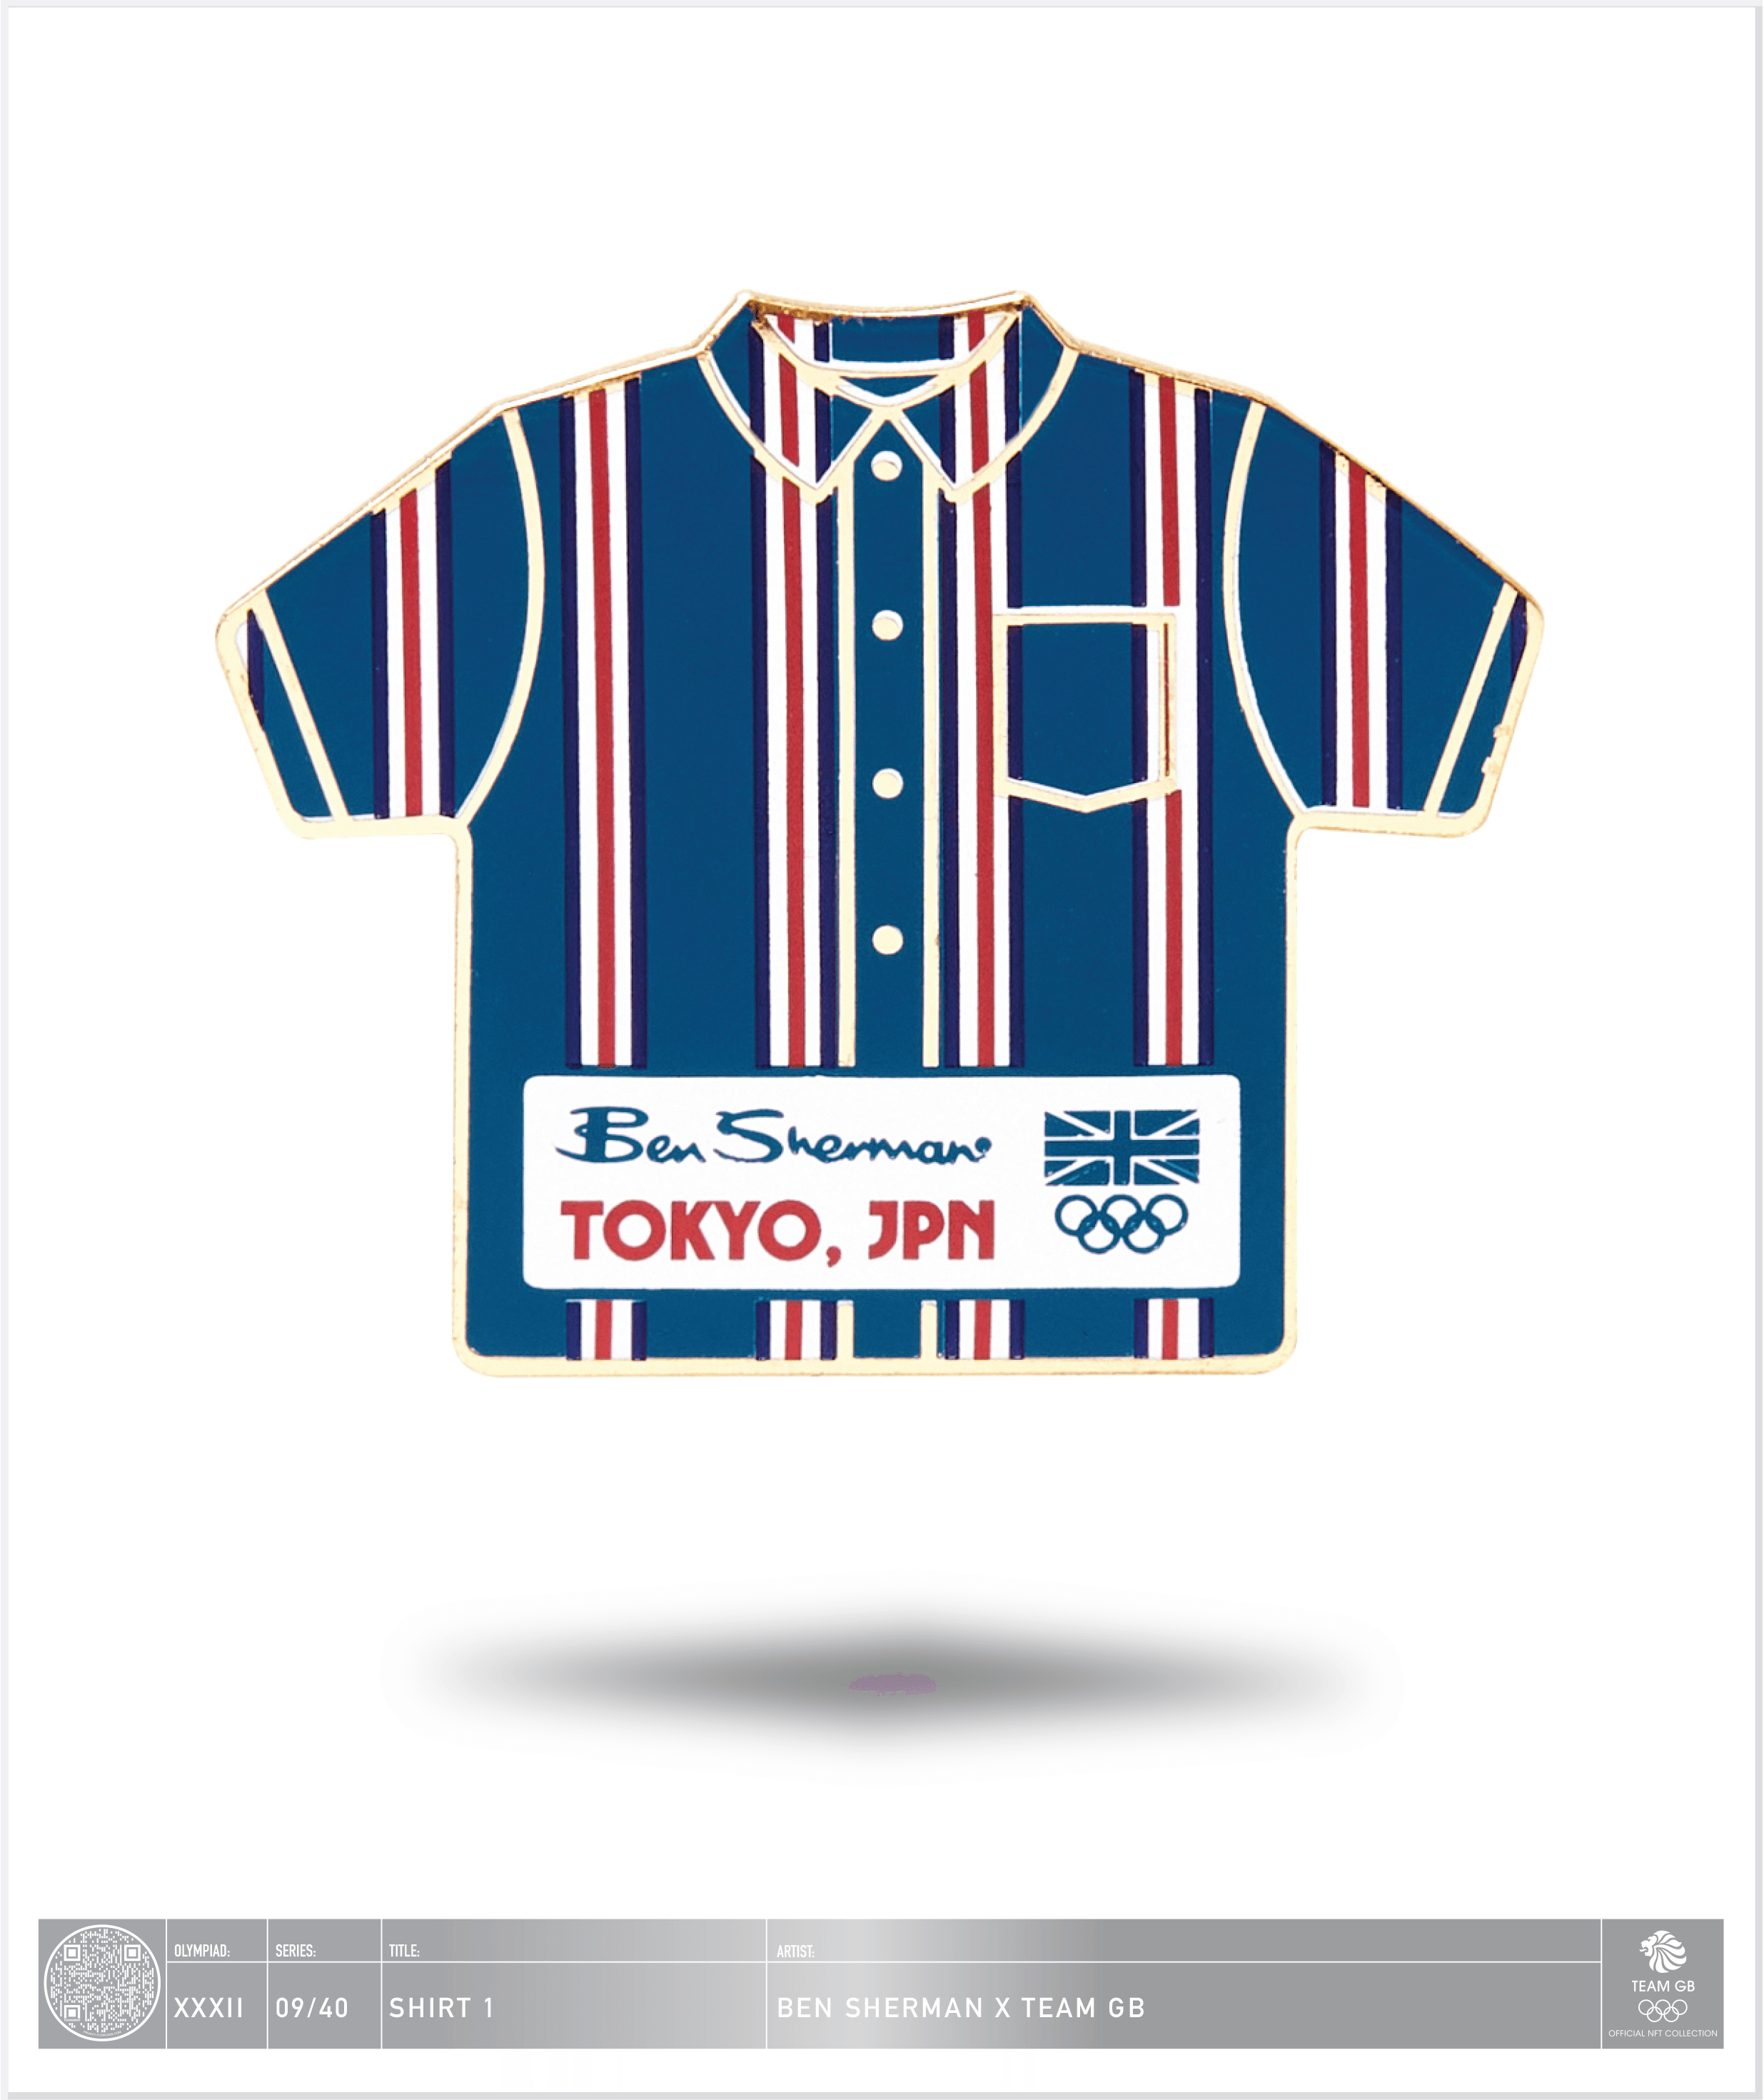 Ben Sherman Tokyo - Shirt 1 - 9 / 40